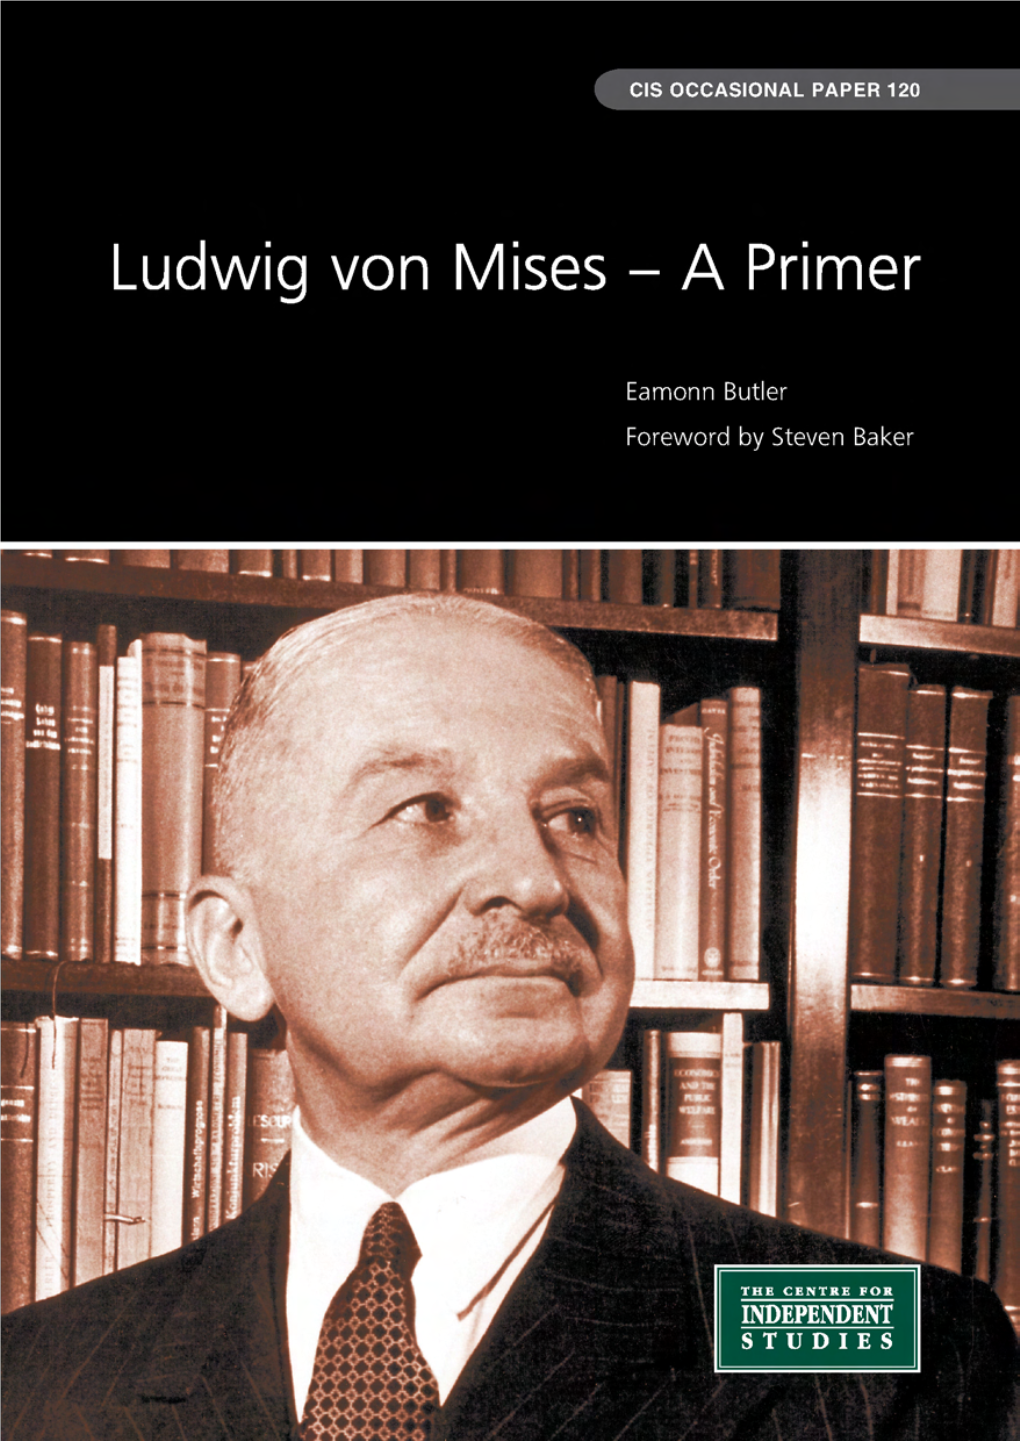 Ludwig Von Mises—A Primer